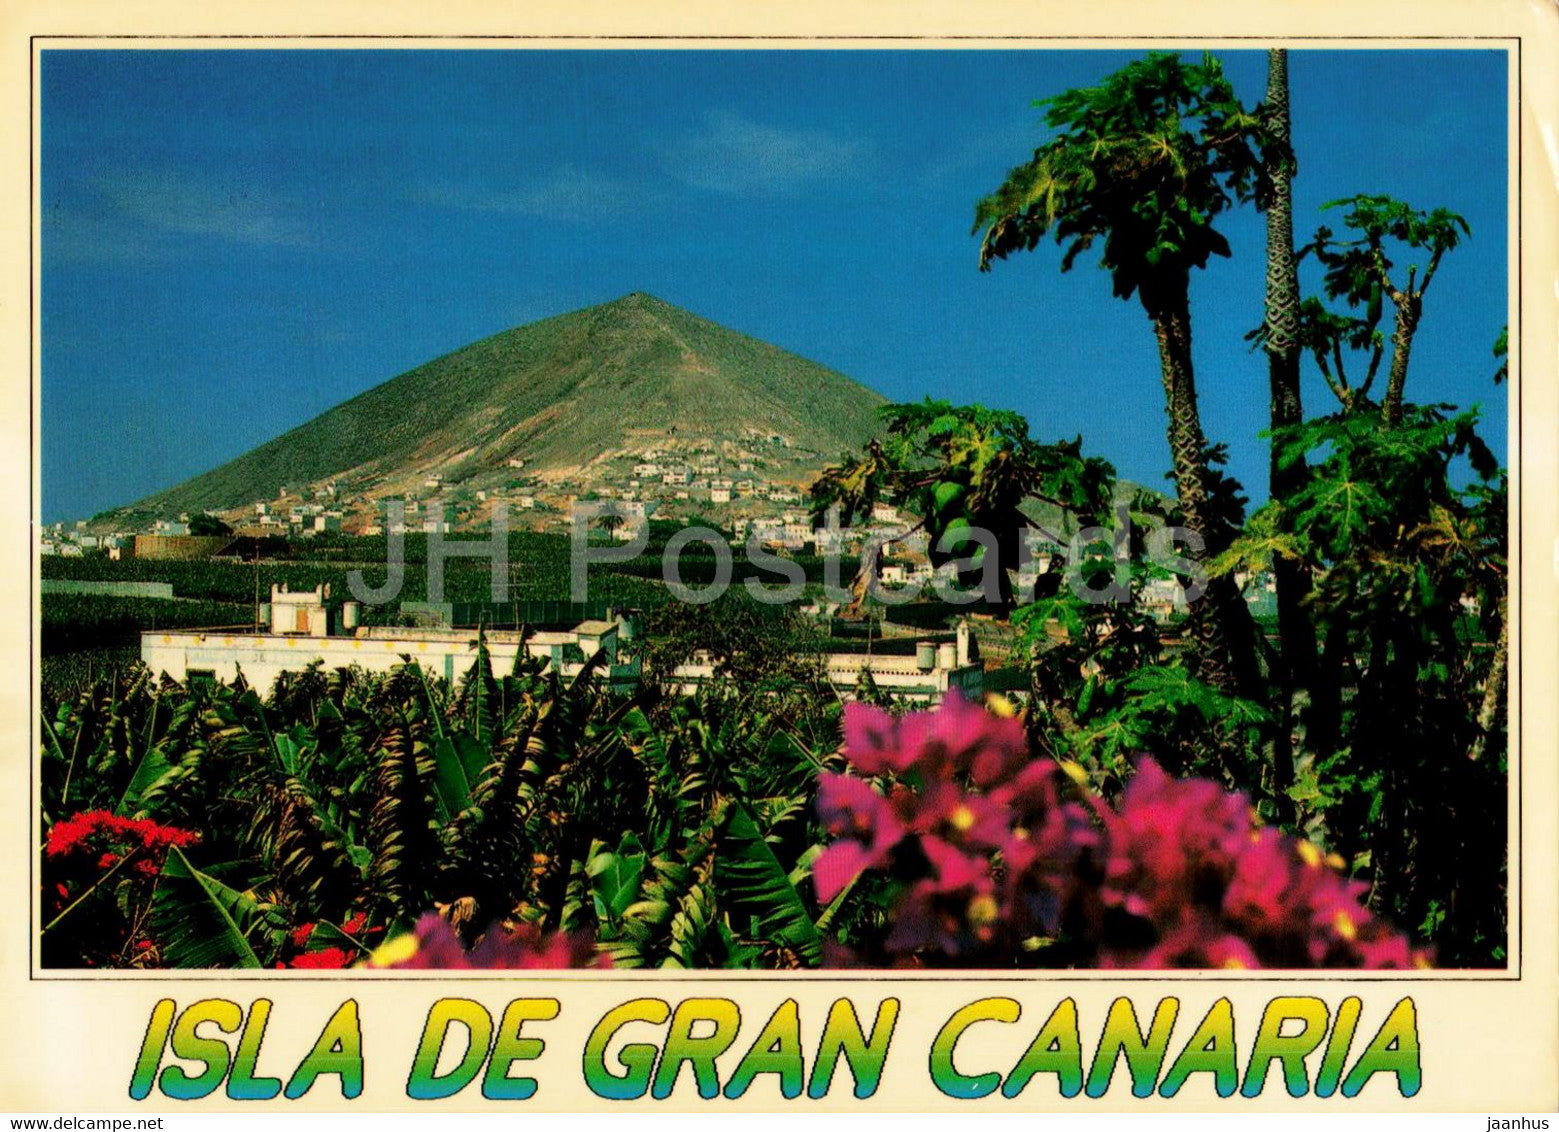 Isla de Gran Canaria - Galdar - 335 - 1994 - Spain - used - JH Postcards